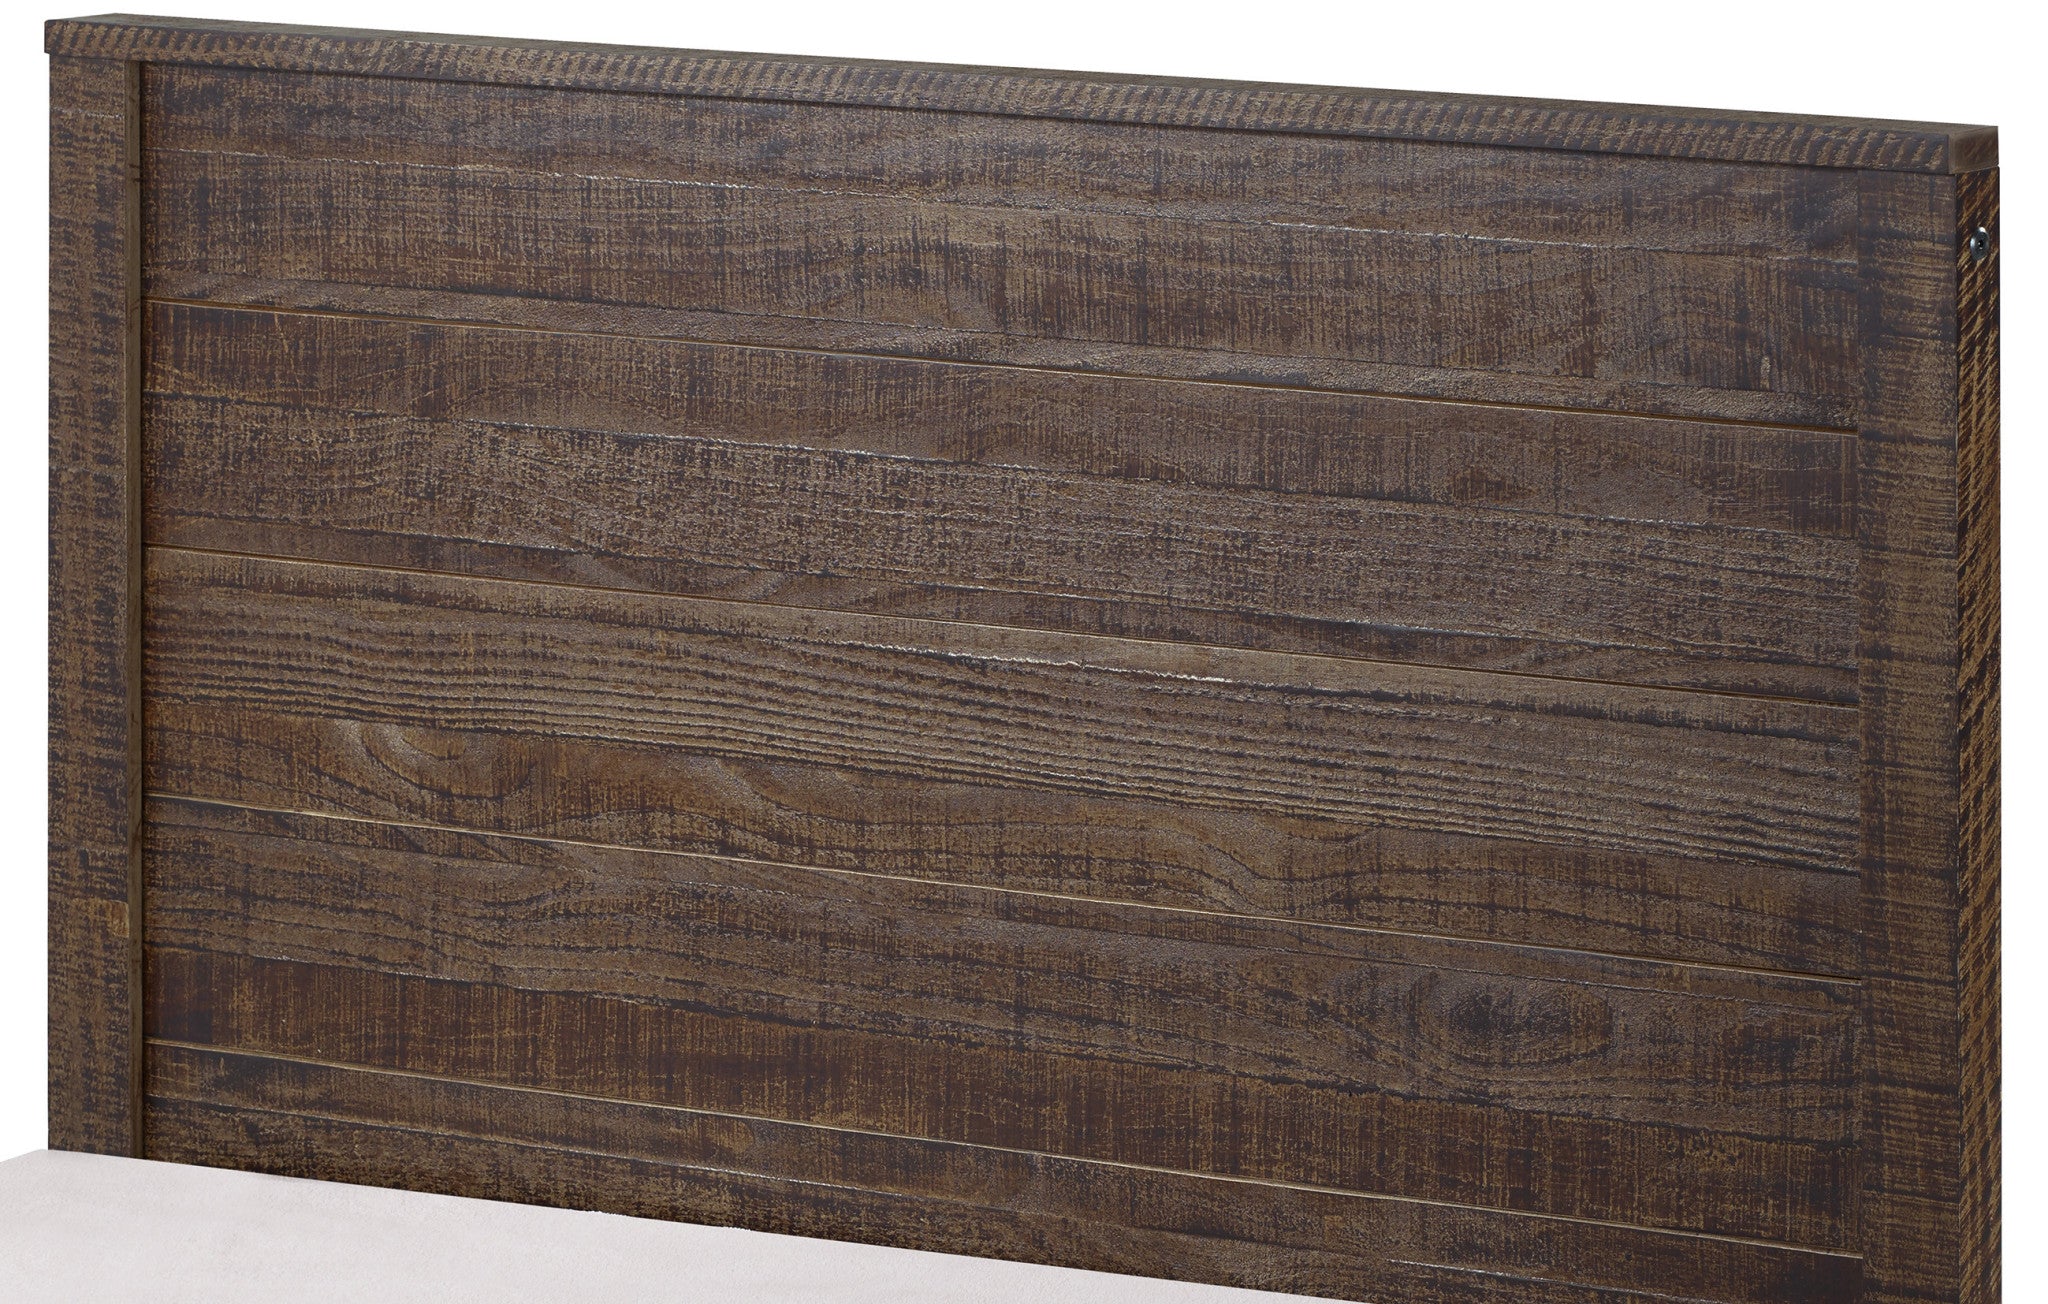 Dark Brown Solid Wood Queen Bed Frame